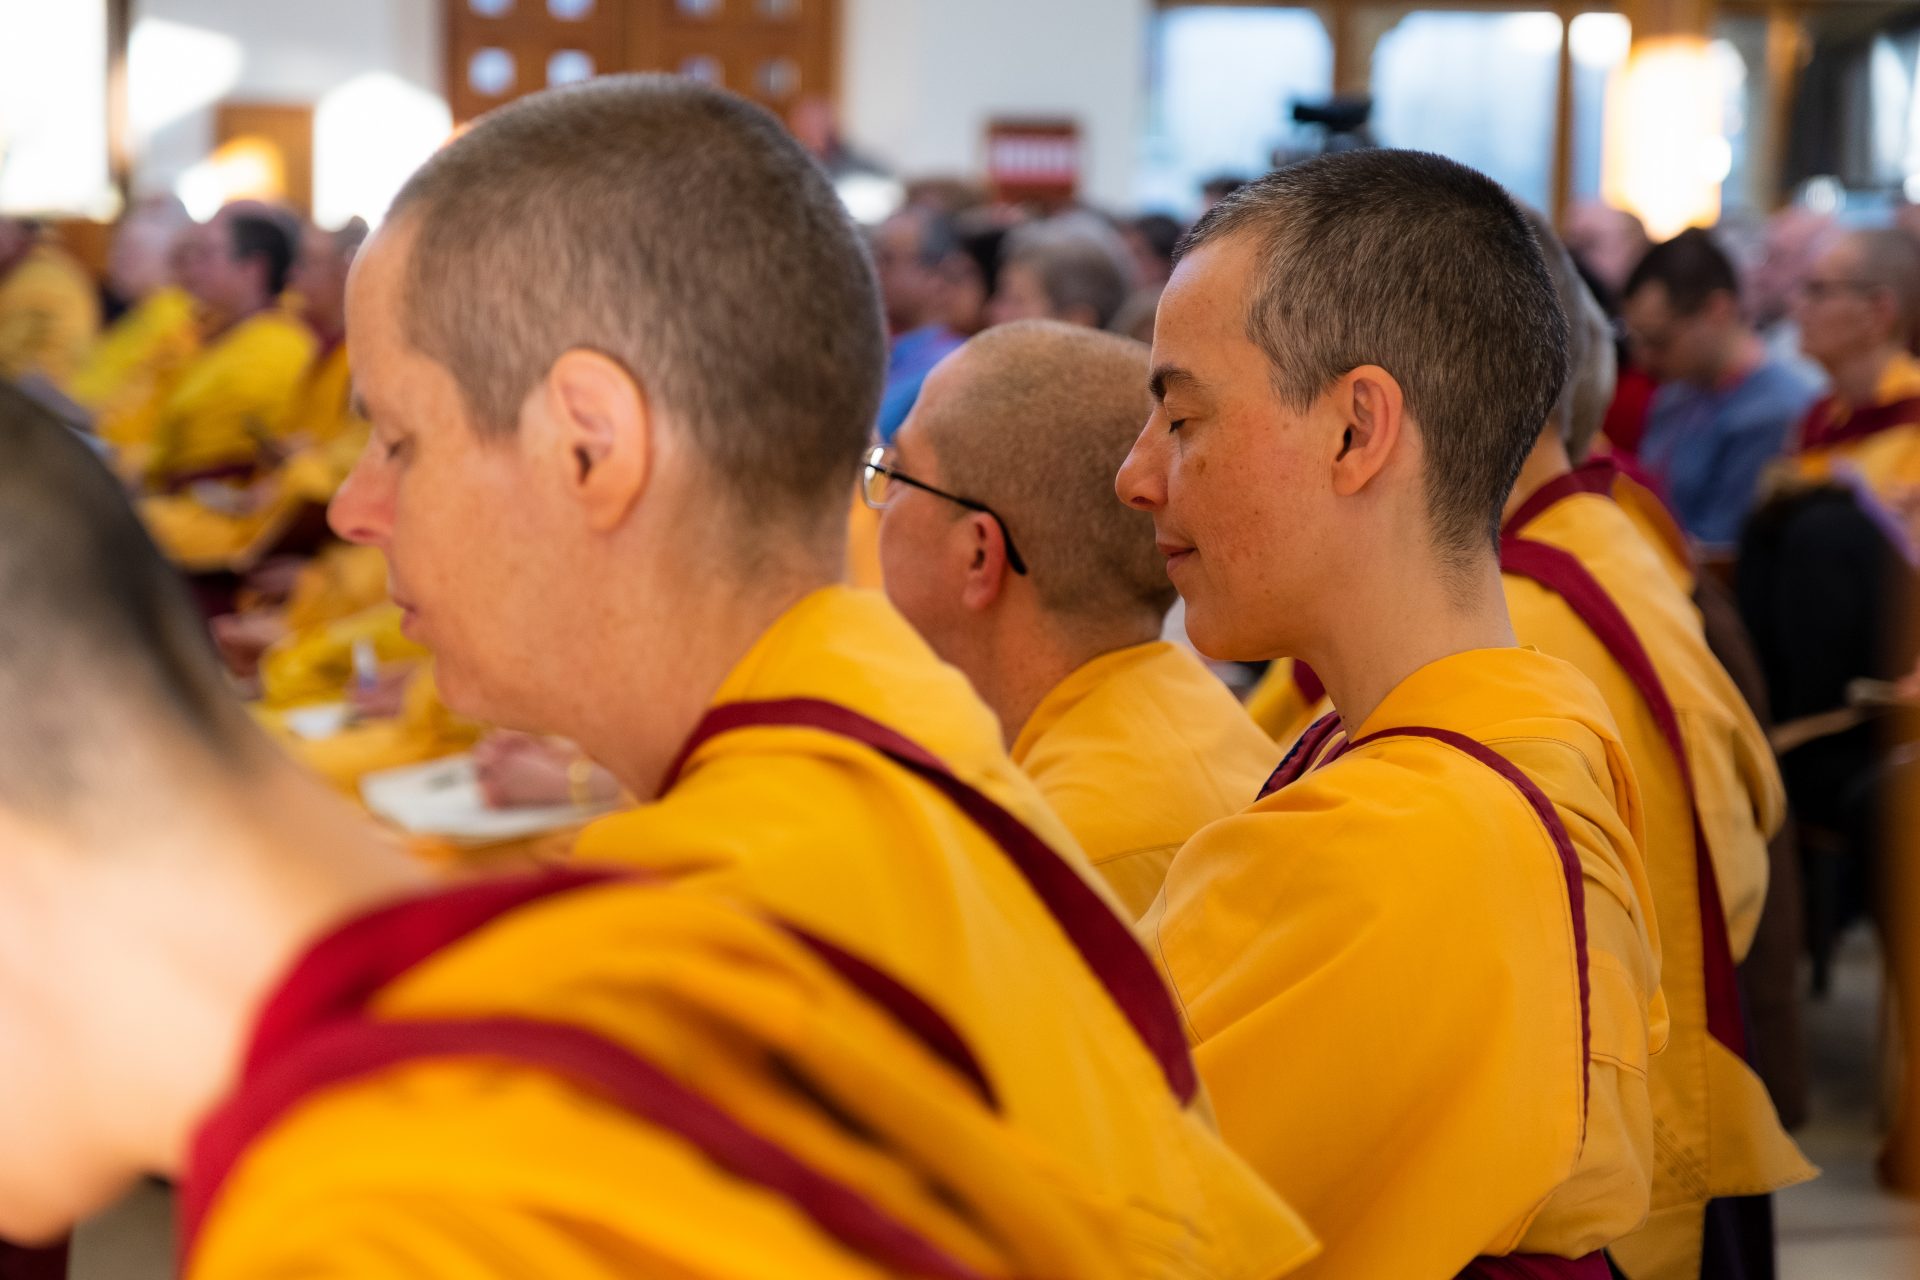 Change that comes from the wisdom of Lamrim Kadampa Buddhism